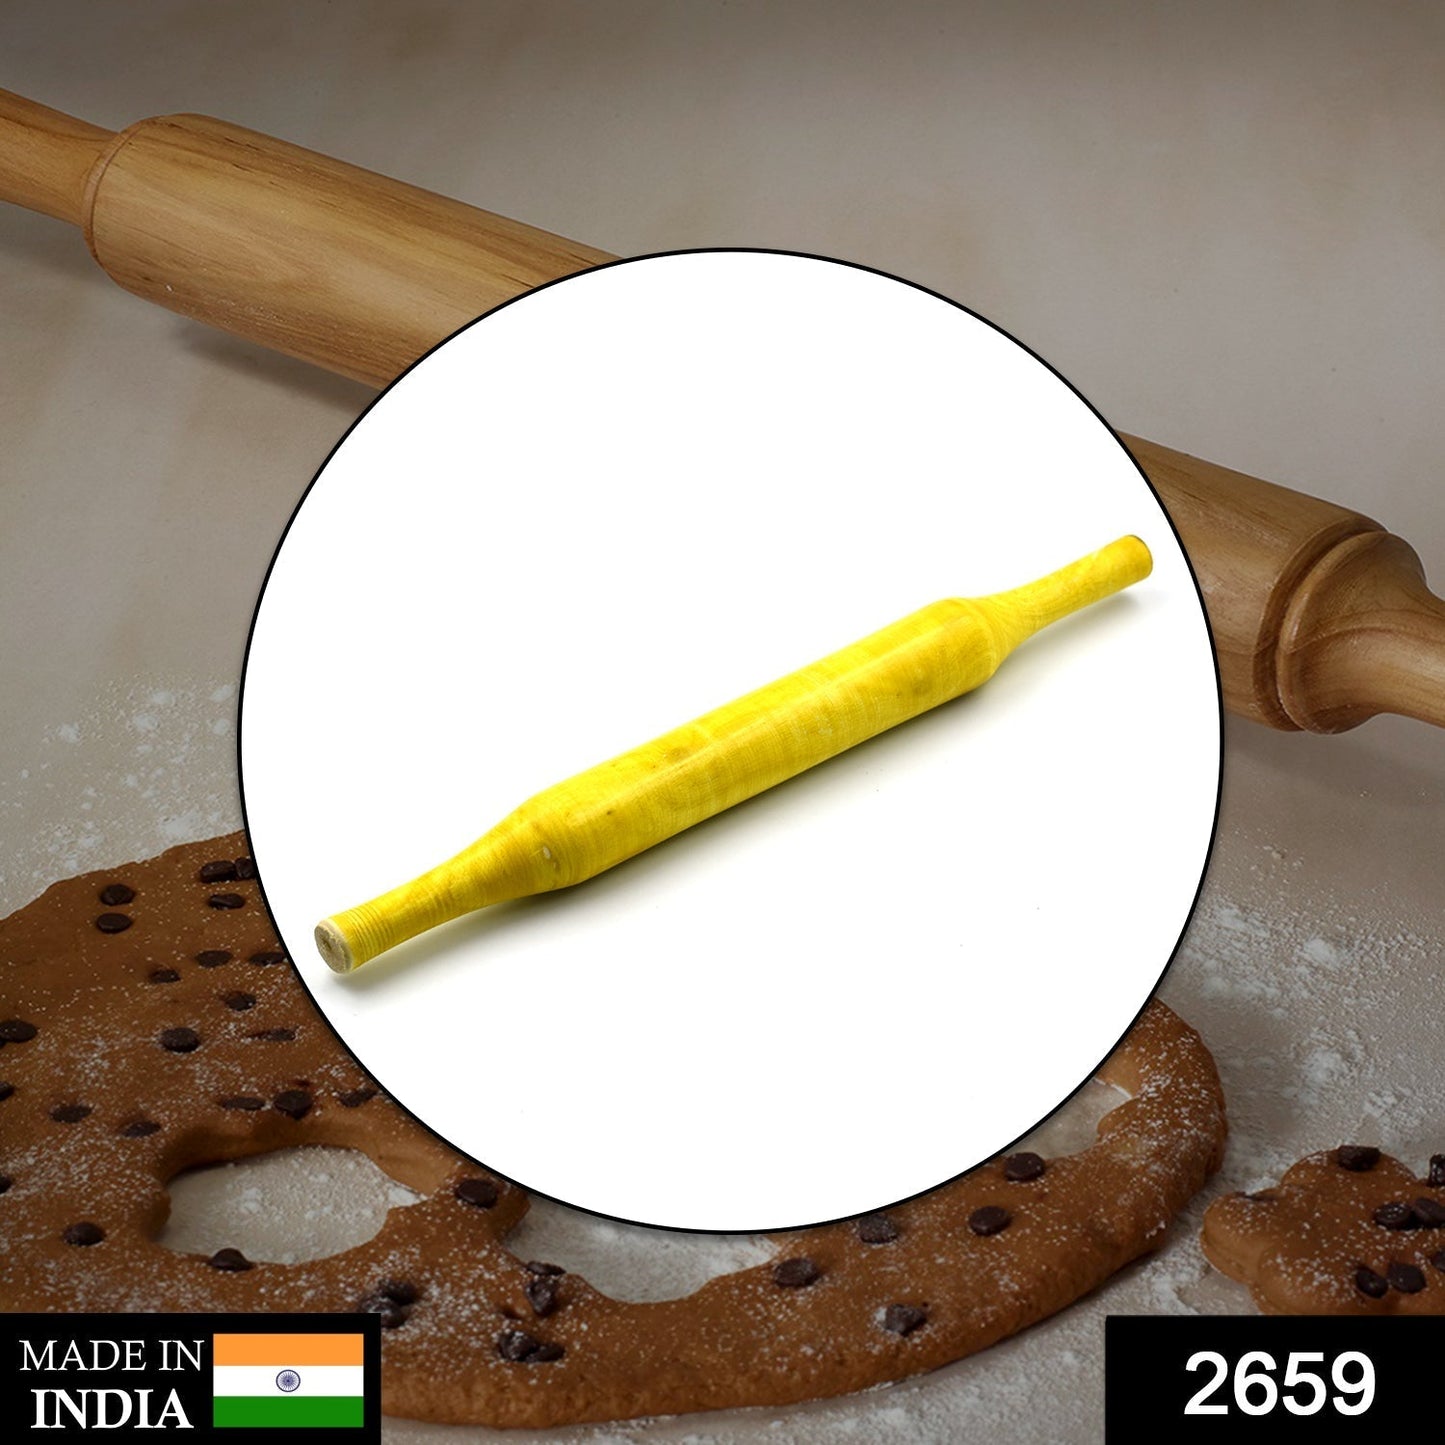 2659 Bombay Belan Used for Home Purposes Including Making Rotis Etc. DeoDap